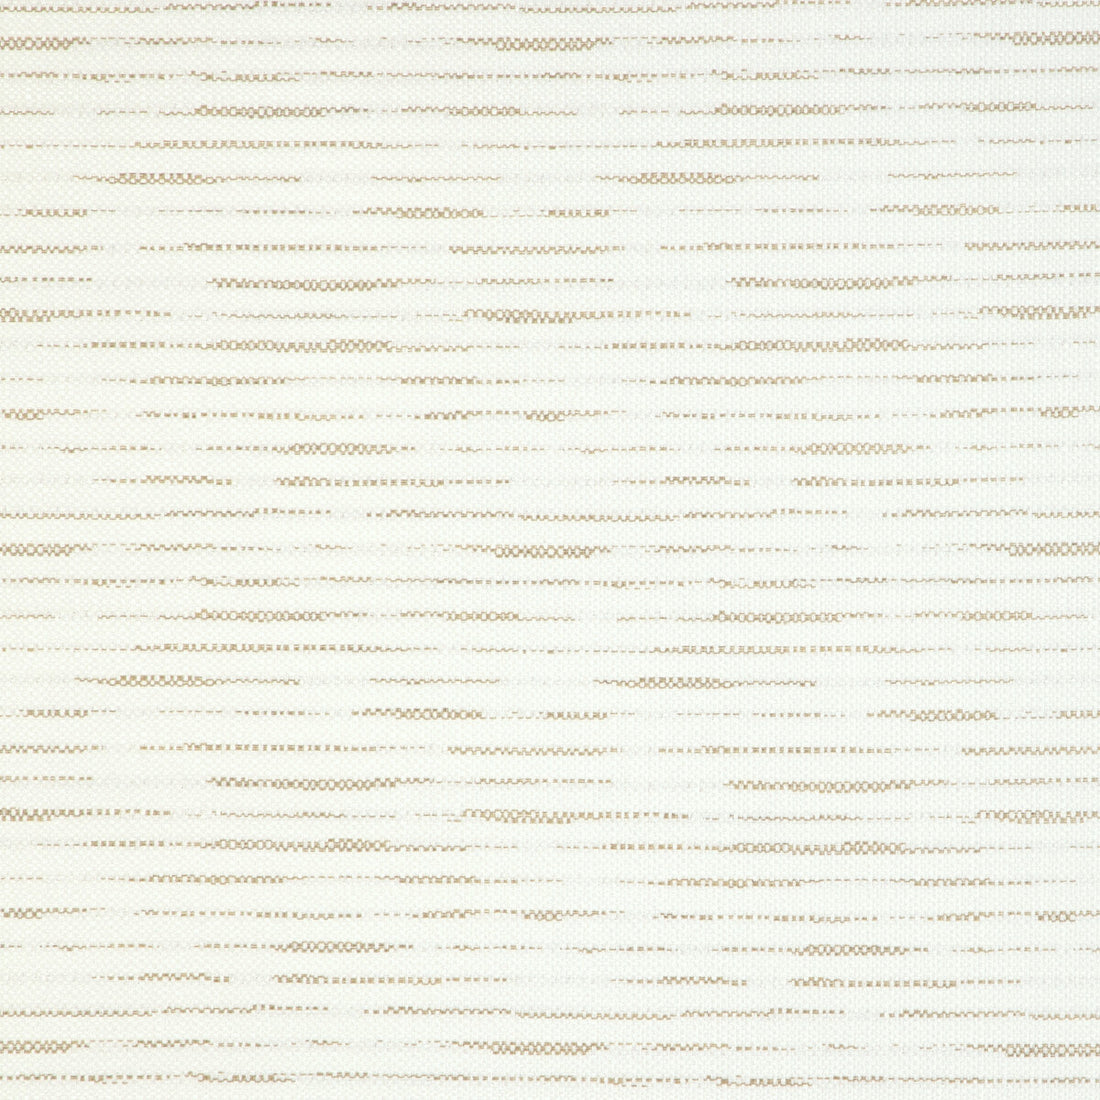 Kravet Design fabric in 36797-16 color - pattern 36797.16.0 - by Kravet Design in the Sea Island Indoor/Outdoor collection